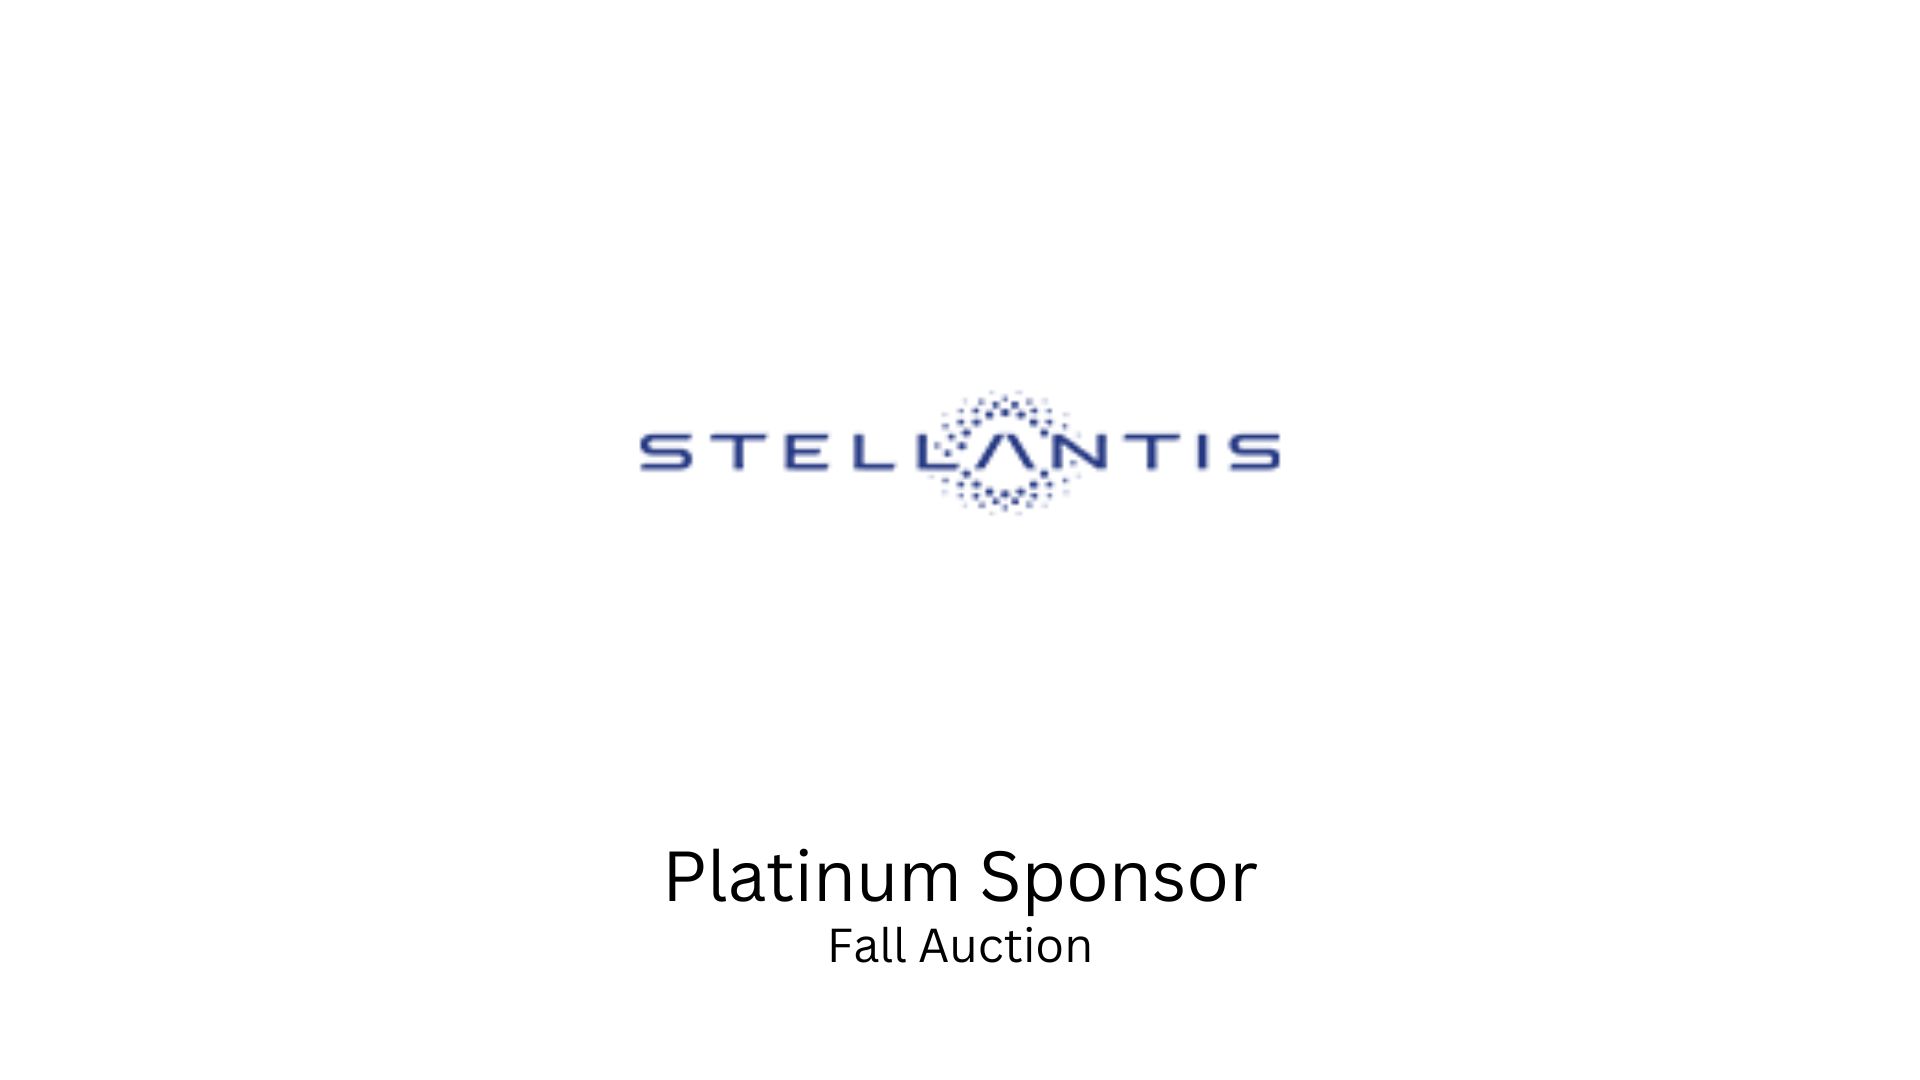 Stellantis, the Platinum Sponsor for 2022 Fall Auction